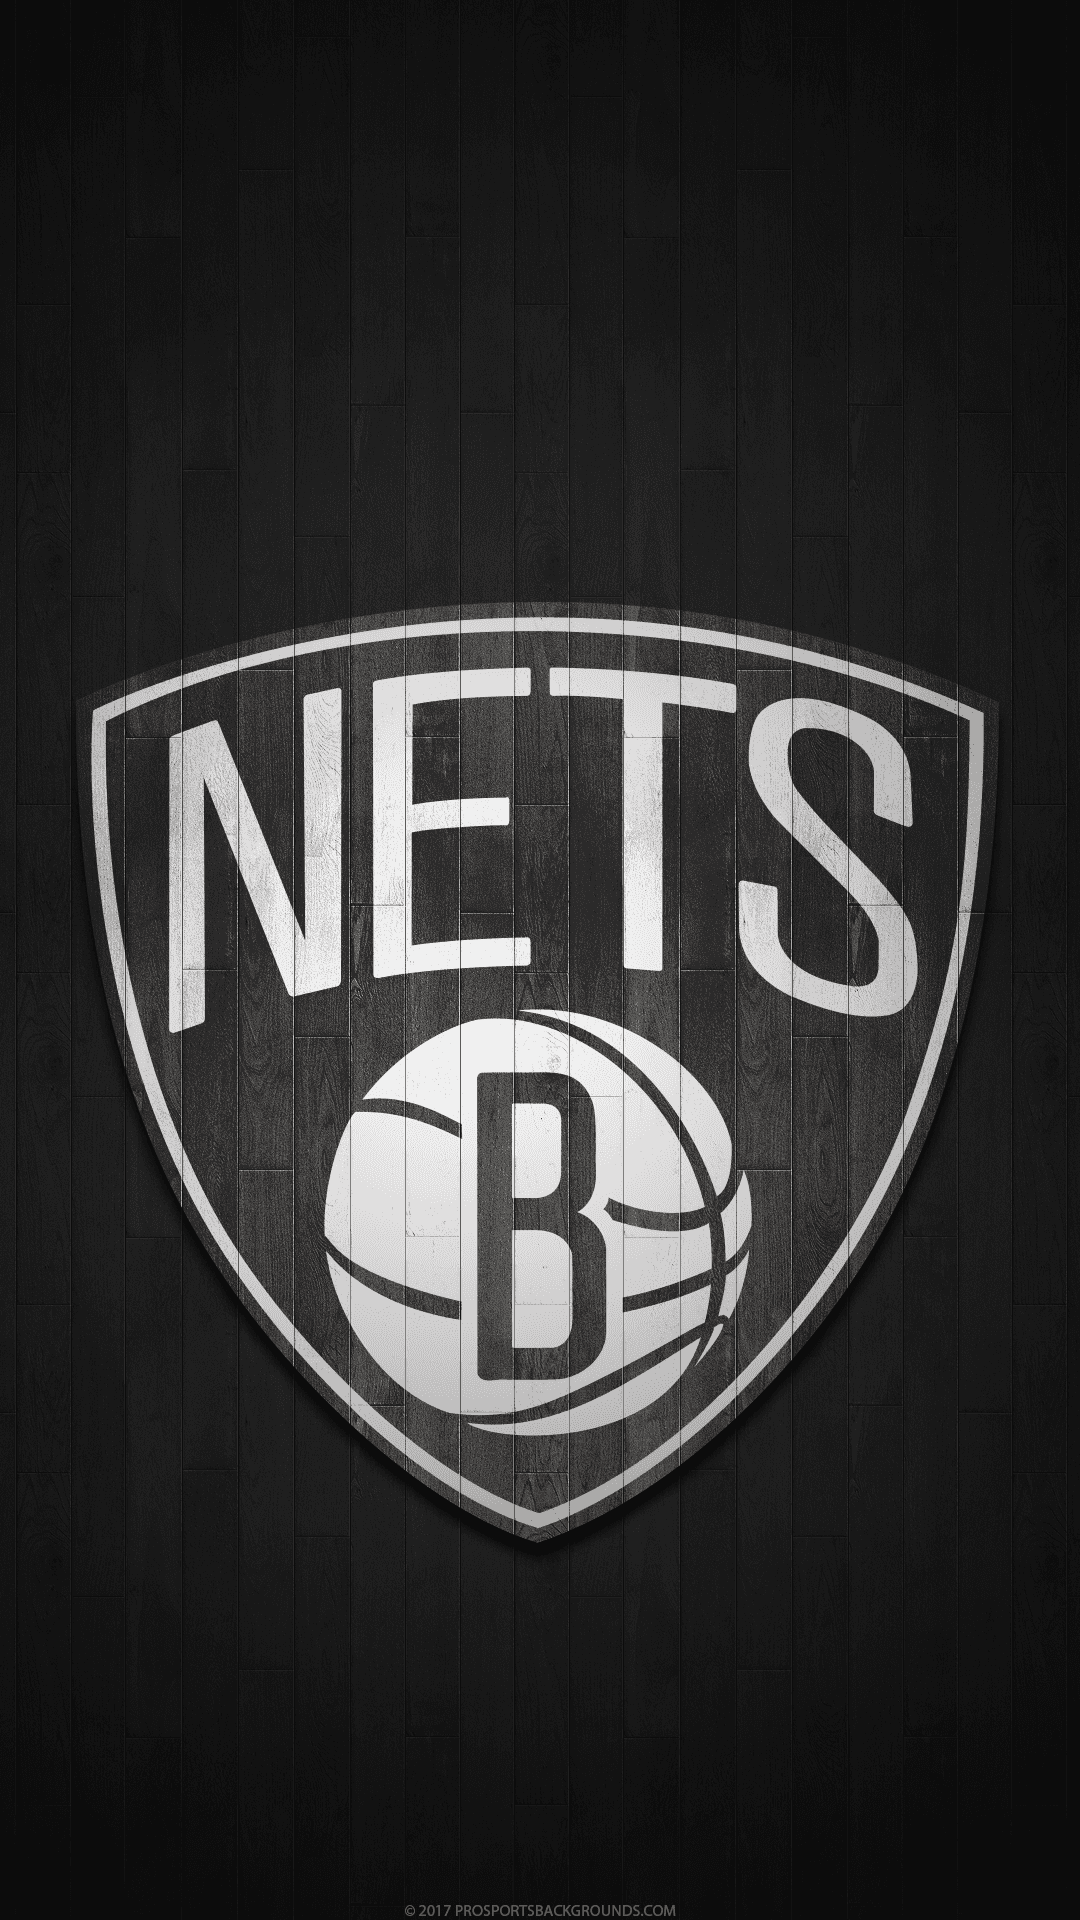 "brooklyn Nets Home Court Advantage"